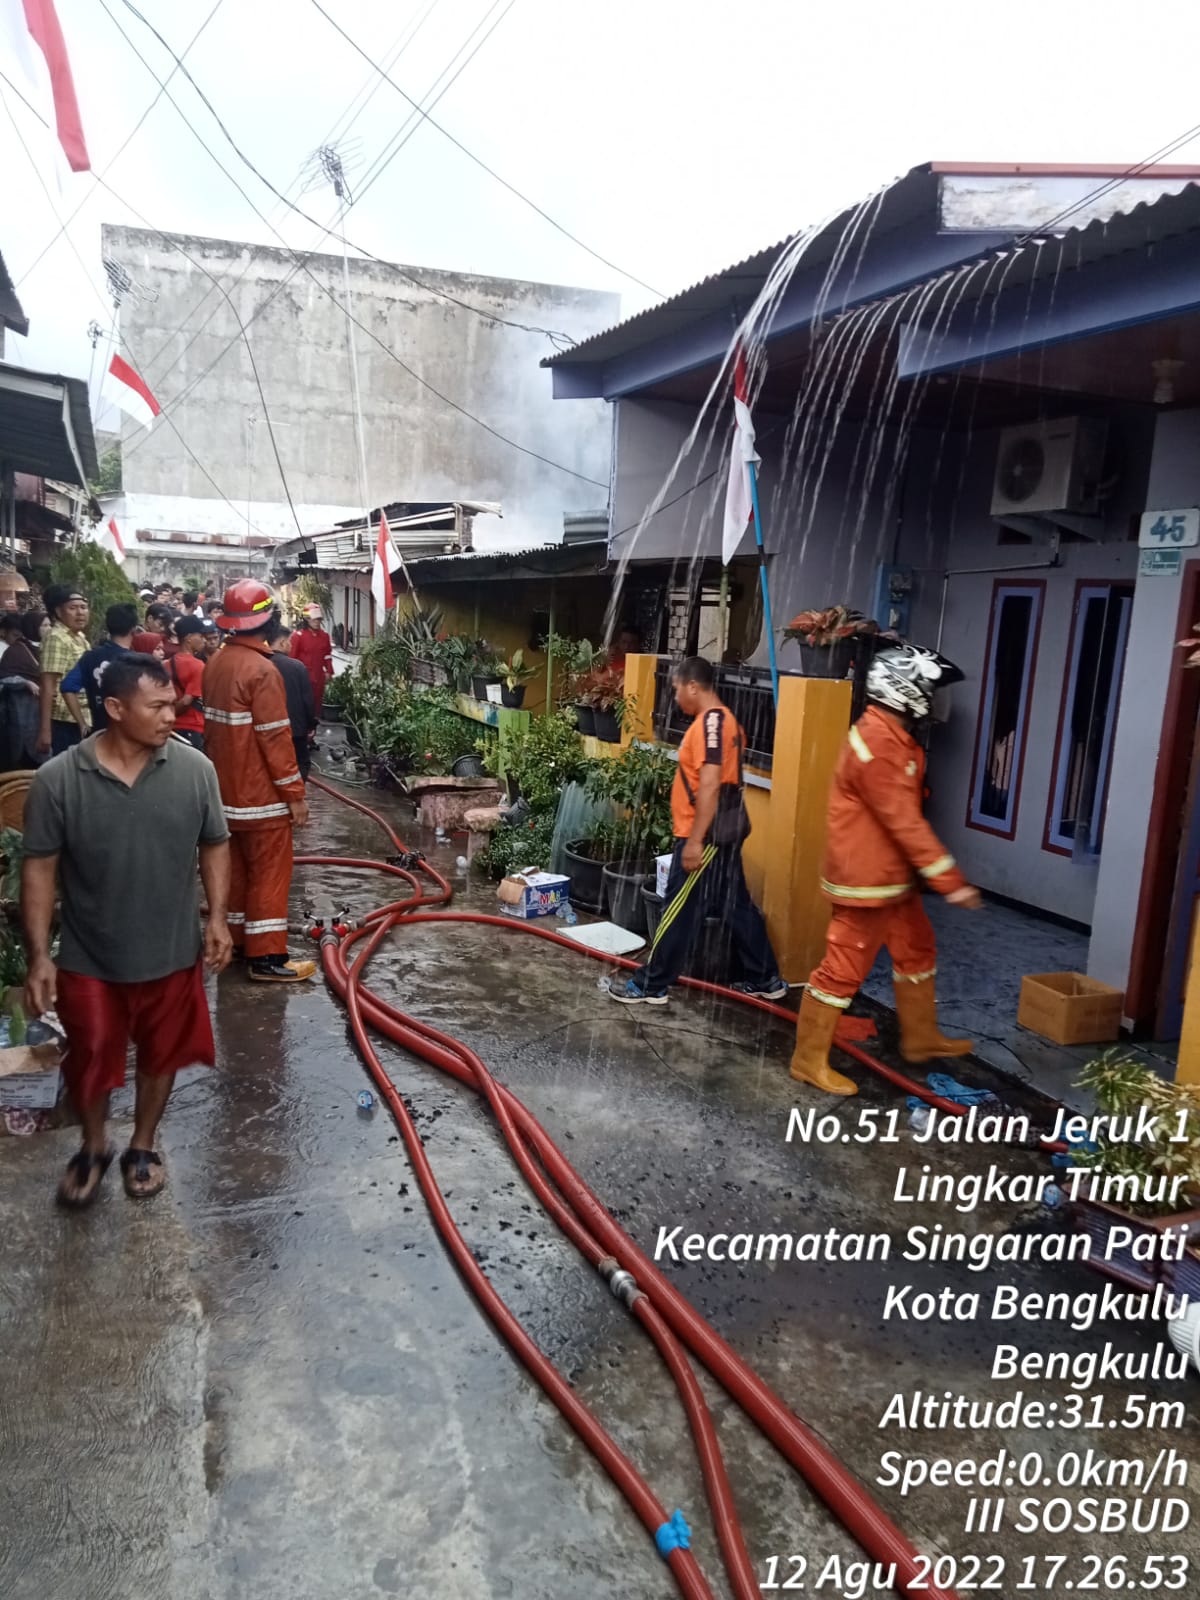 Sepuluh Rumah, Toko Aquarium dan Usaha Laundry di Bengkulu Terbakar, Ini Daftar Korbannya